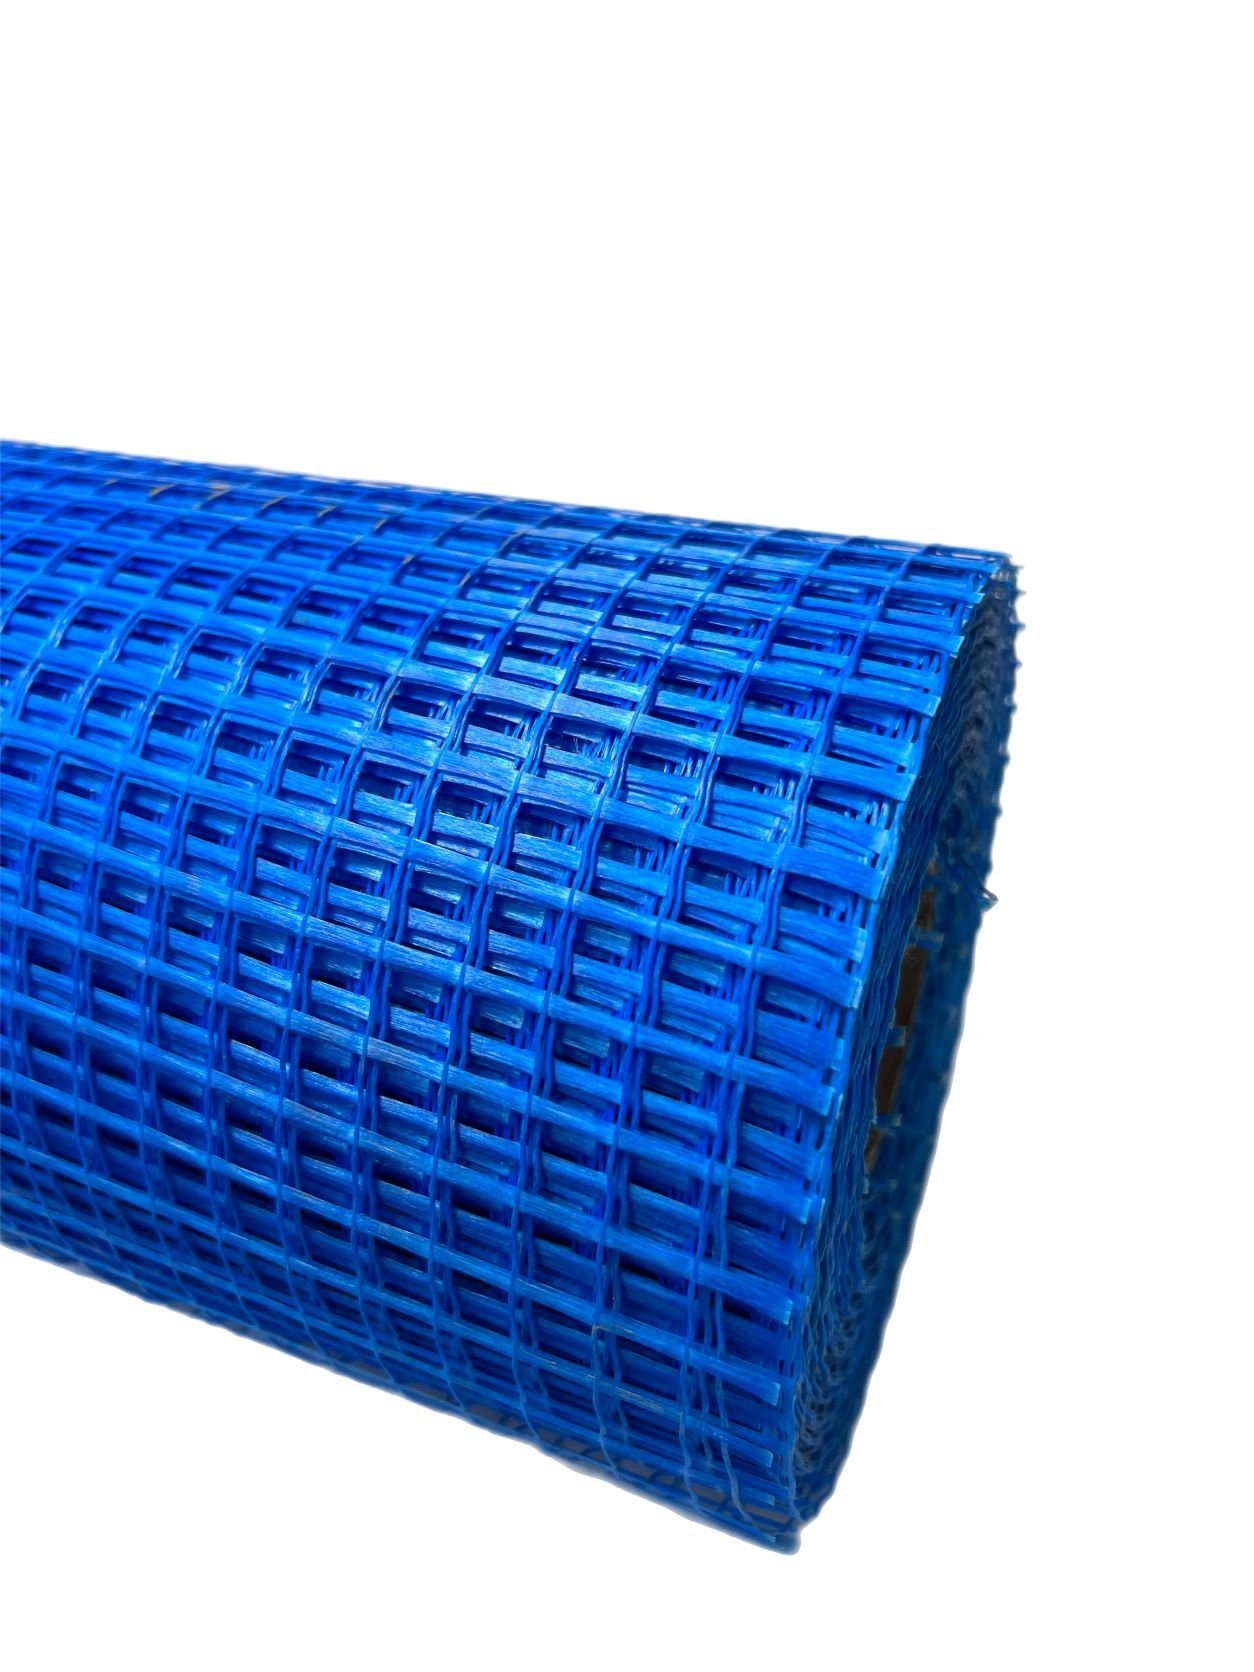 Blau Glaswolle 500m² Putzgewebe 110g/m² Glasfasergewebe VaGo-Tools